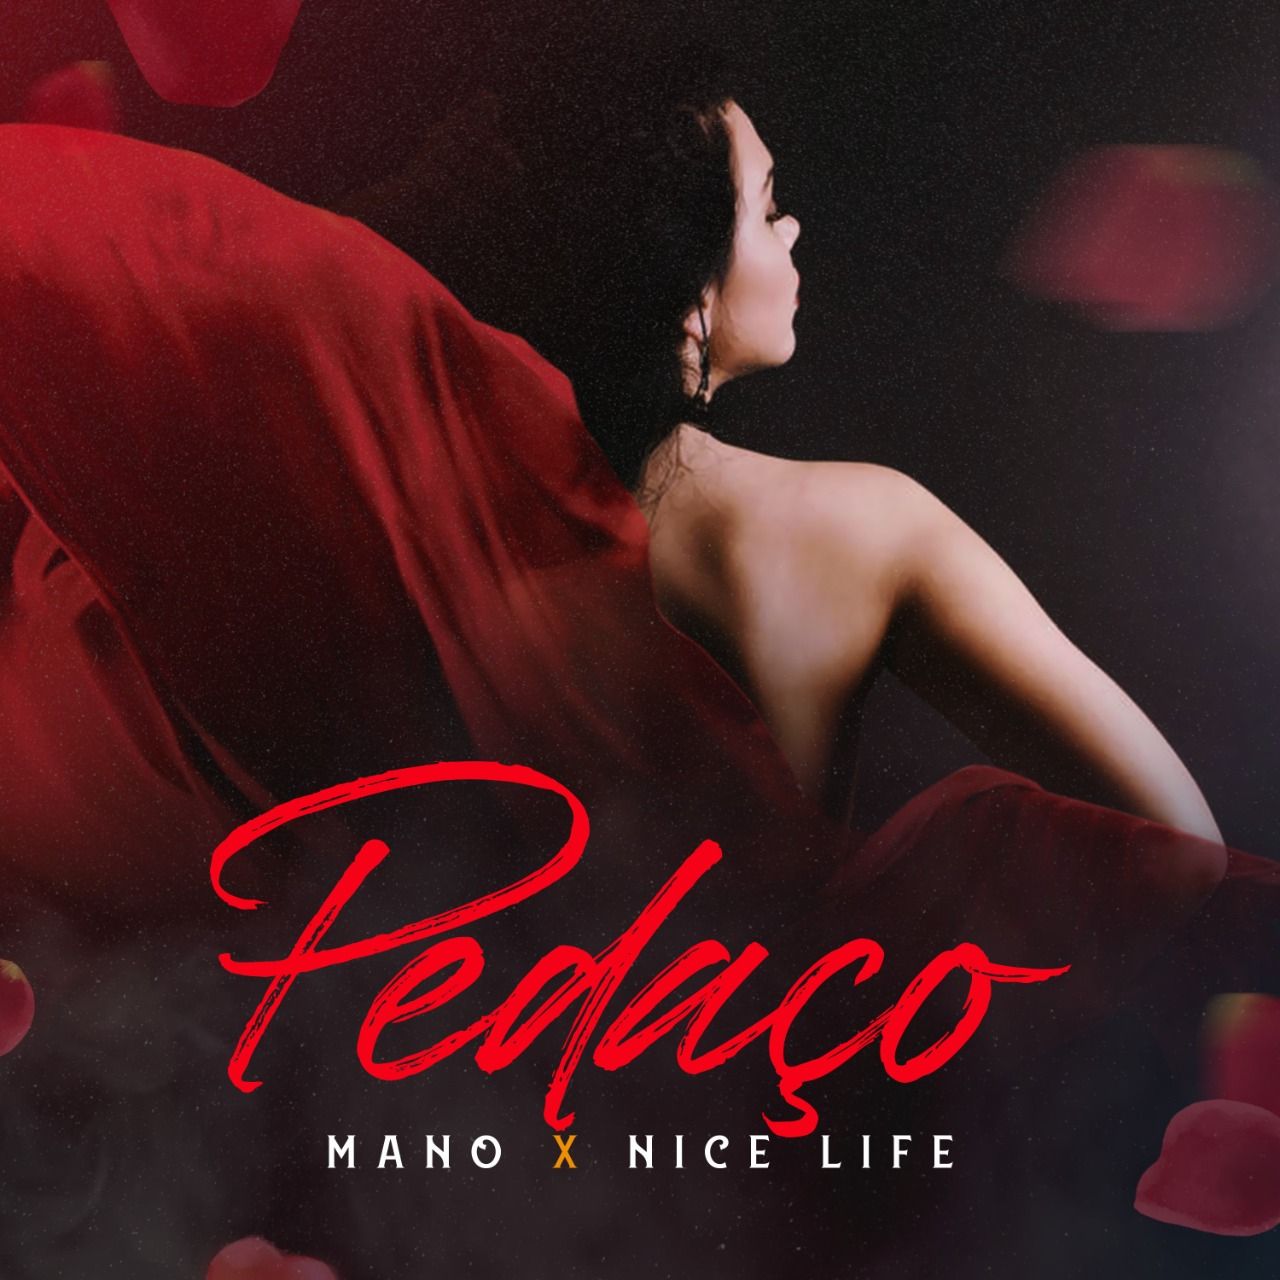 डाउनलोड करा Mano X Nice Life - Pedaco